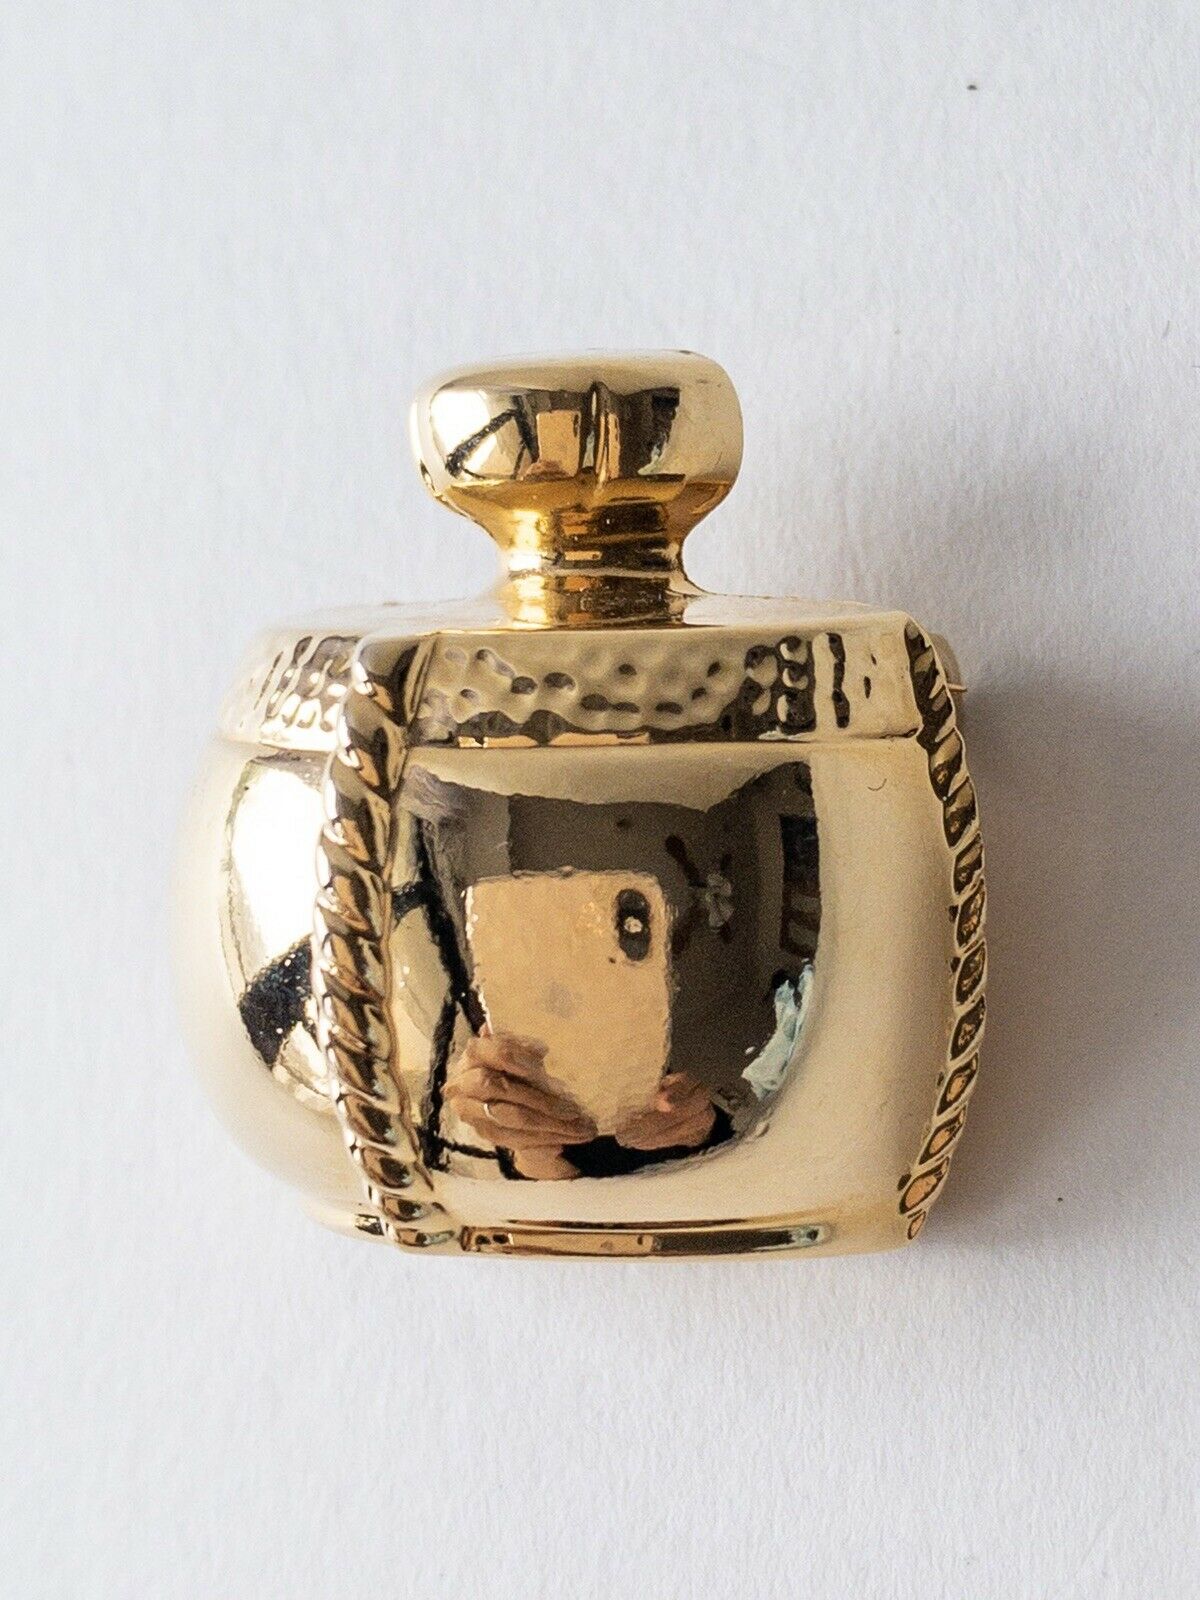 YSL Yves Saint Laurent Perfume Bottle Gold Tone Brooch Pin Vintage